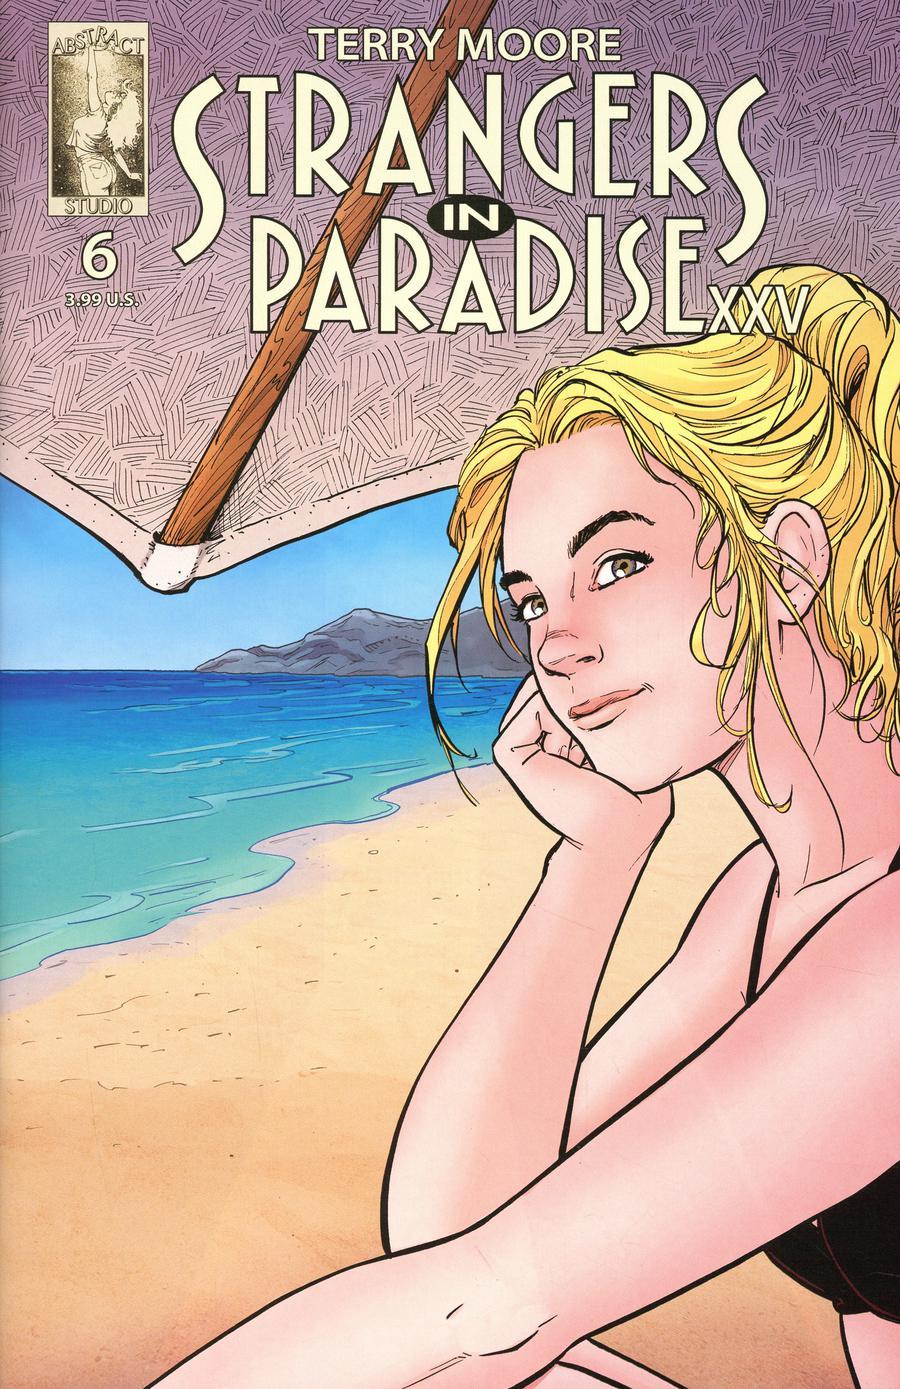 Strangers In Paradise XXV Vol. 1 #6